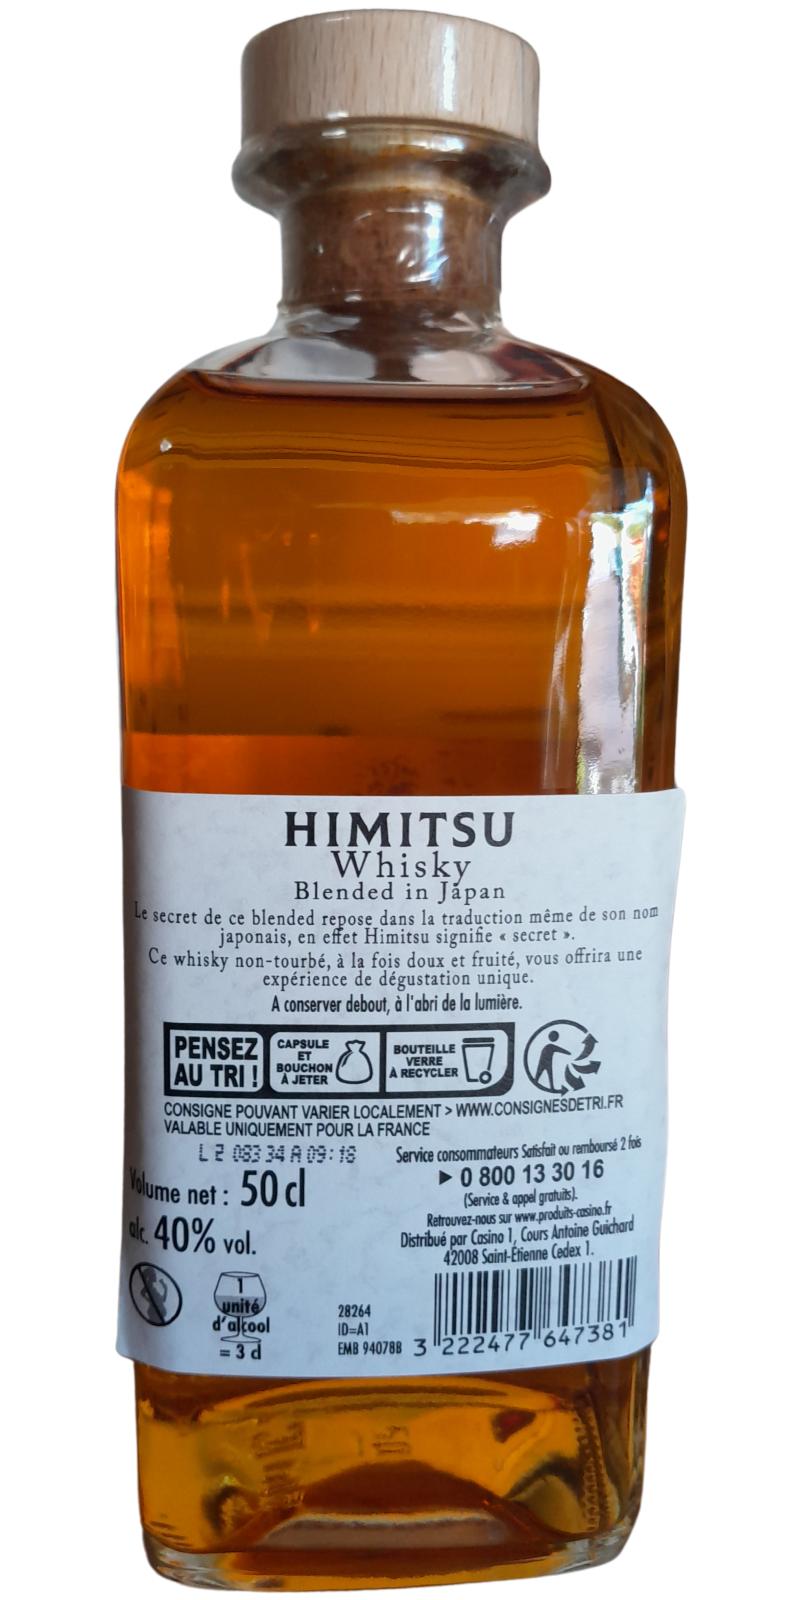 Himitsu whisky